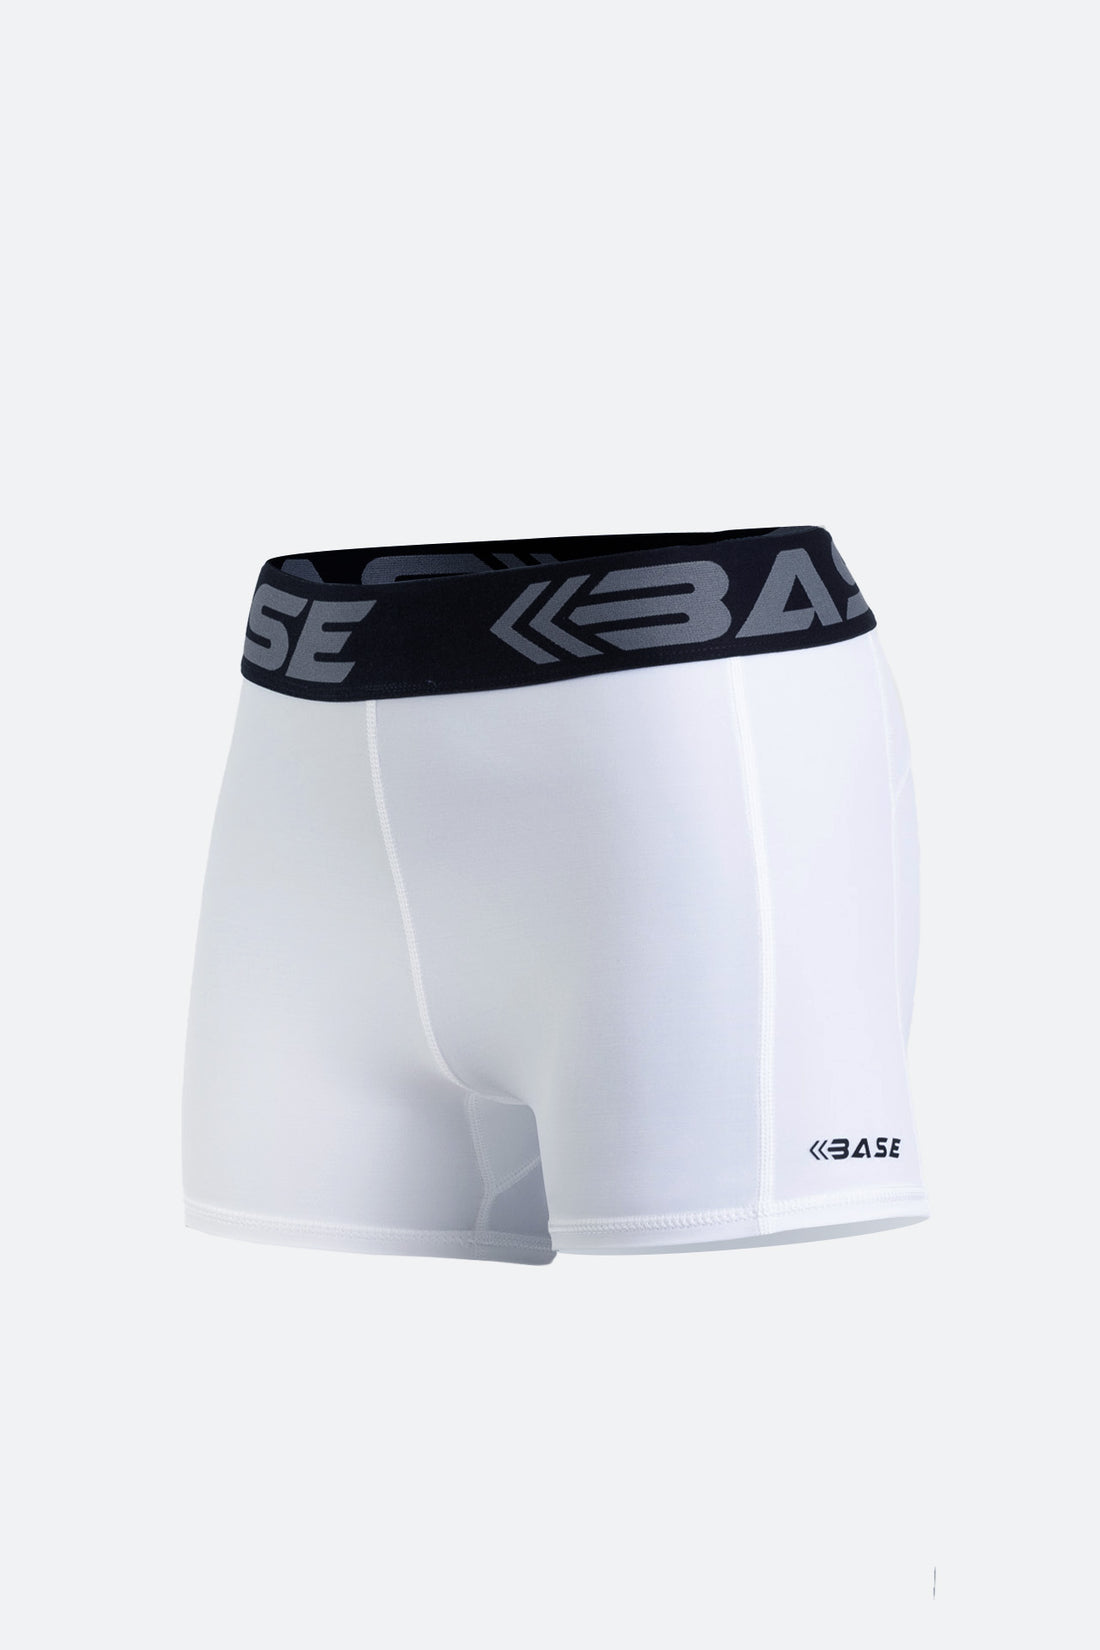 BASE Youth Compression Shorts - White – BASE Compression